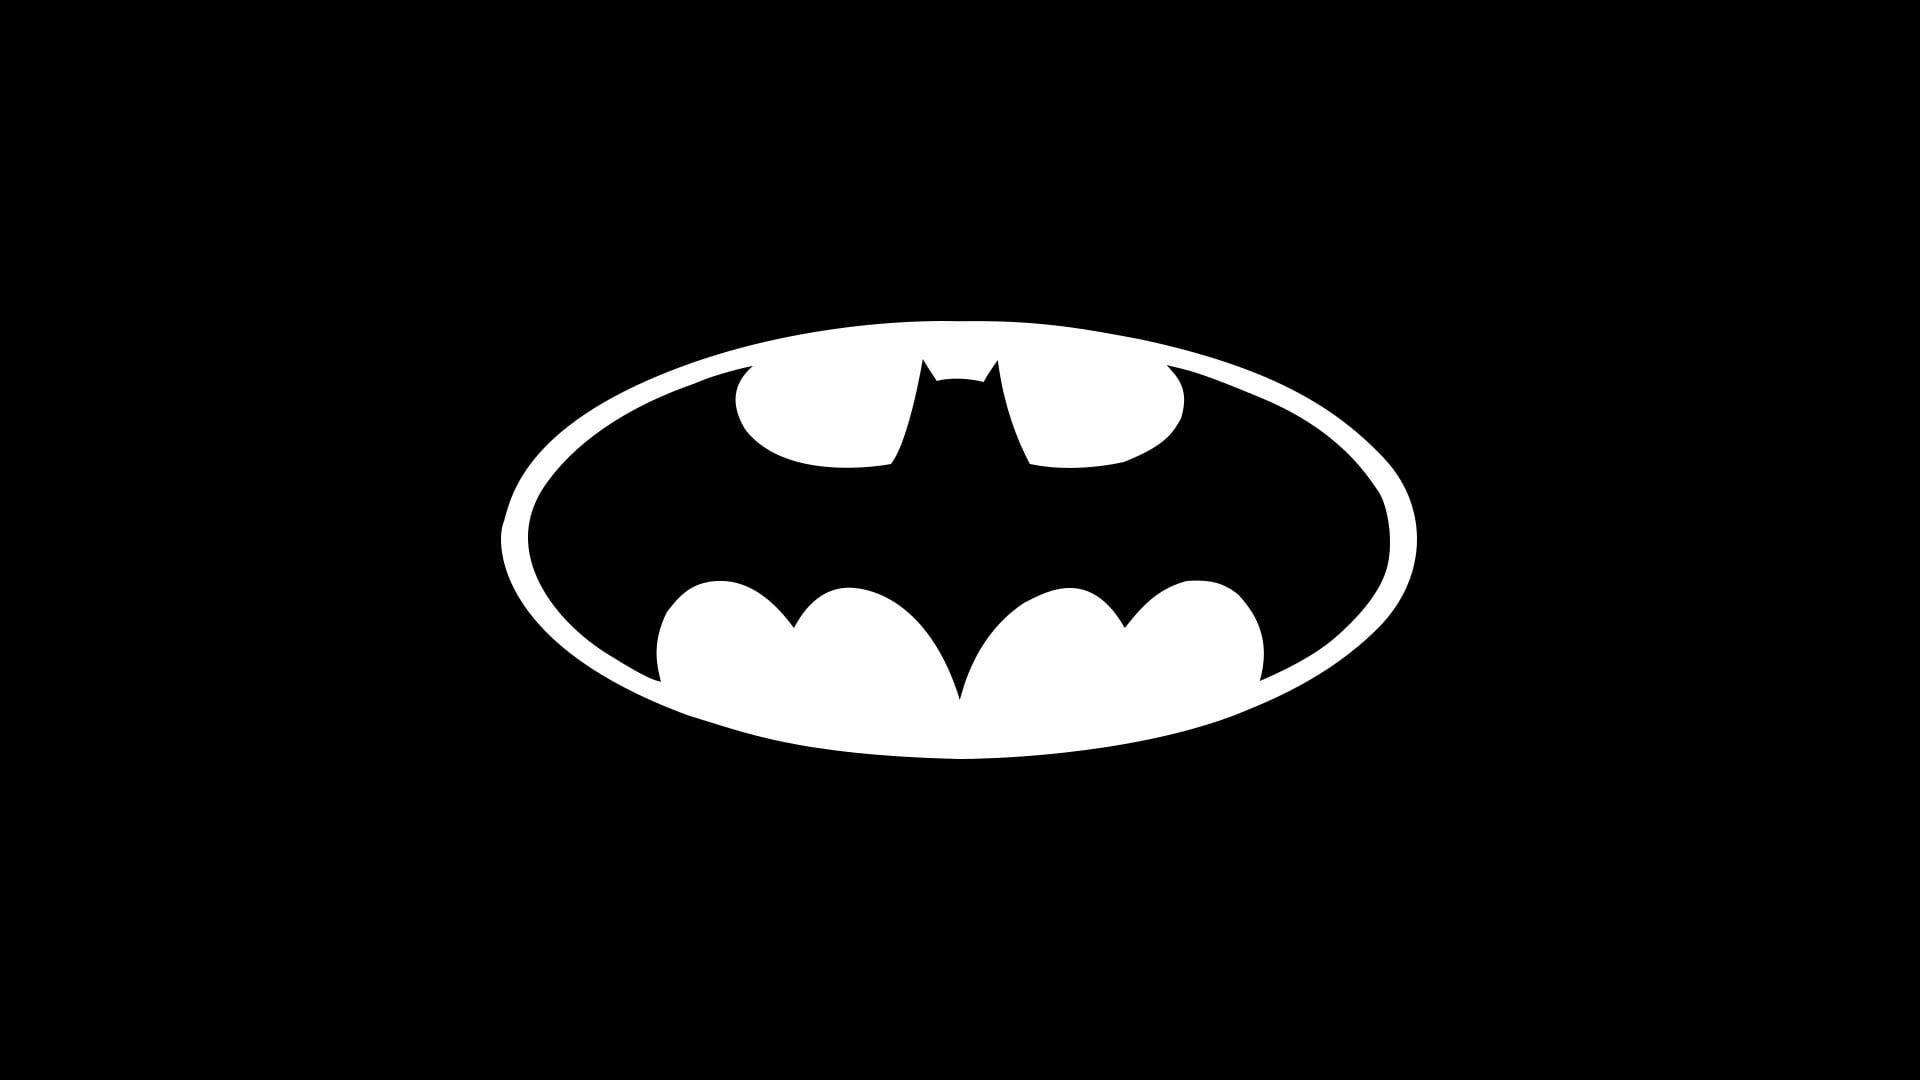 Batman logo, illuminated, lighting equipment, indoors, studio shot